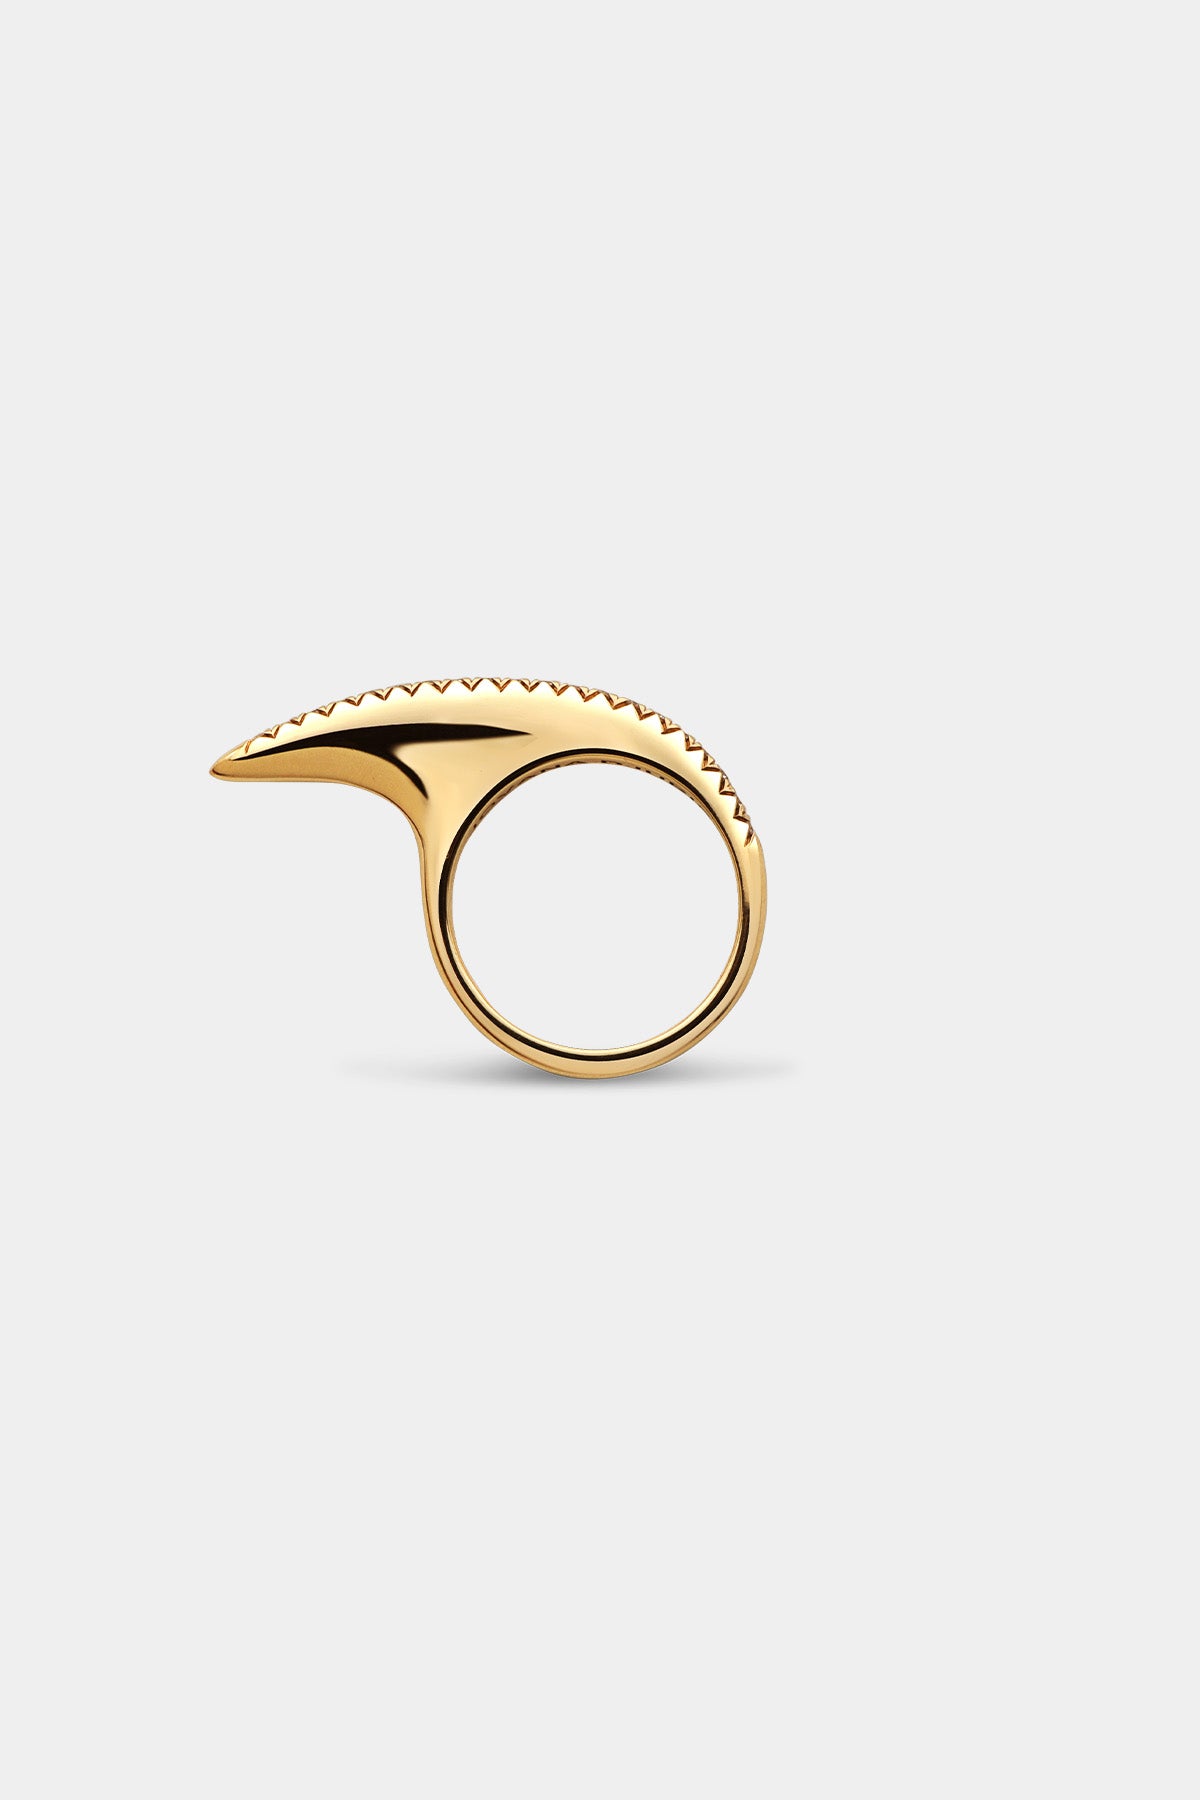 JOVANA DJURIC | SMALL YELLOW GOLD & DIAMOND SLICE RING